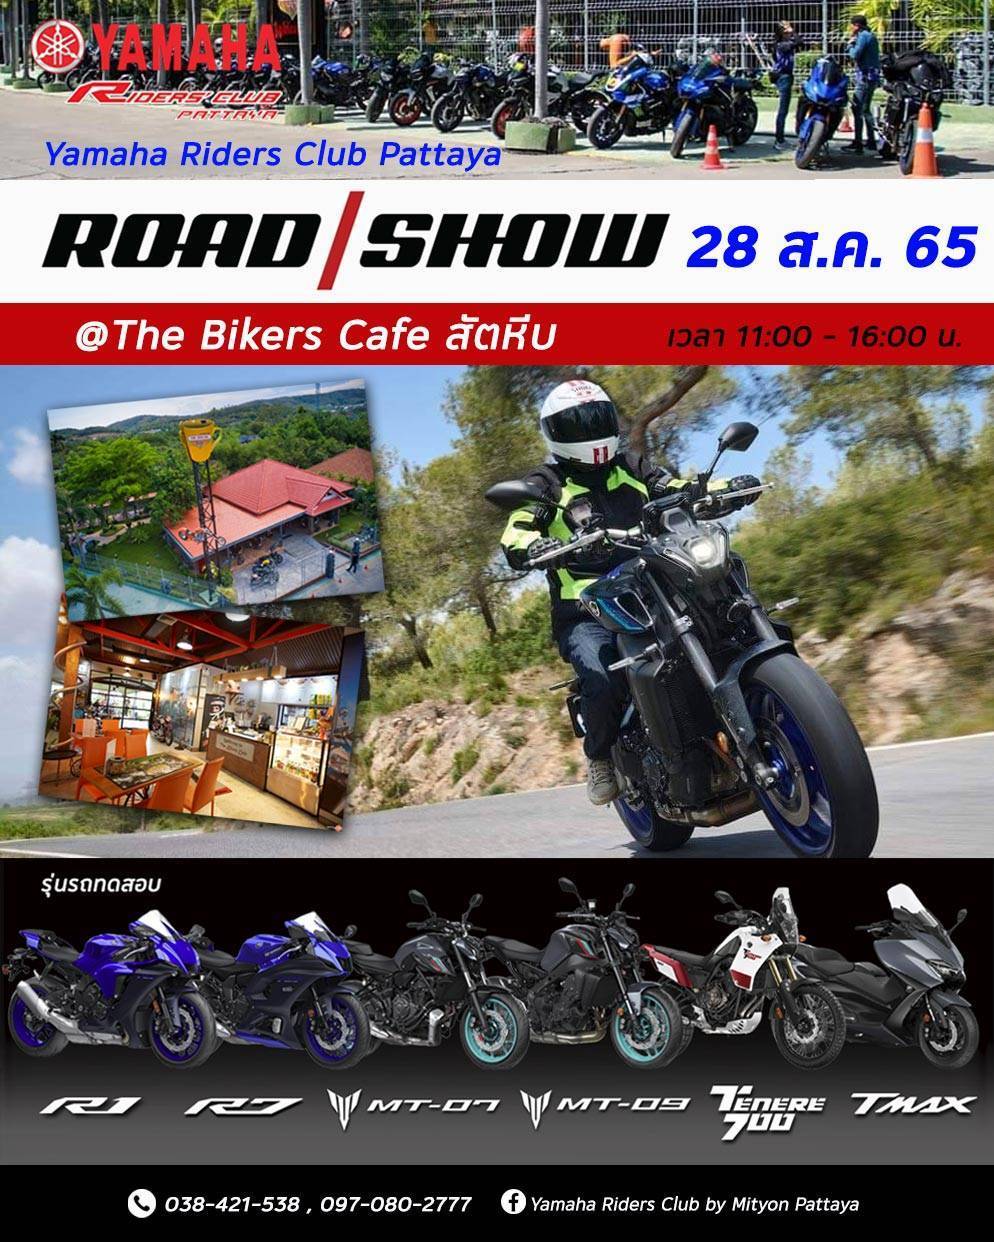 Yamaha Riders Club Pattaya Road Show